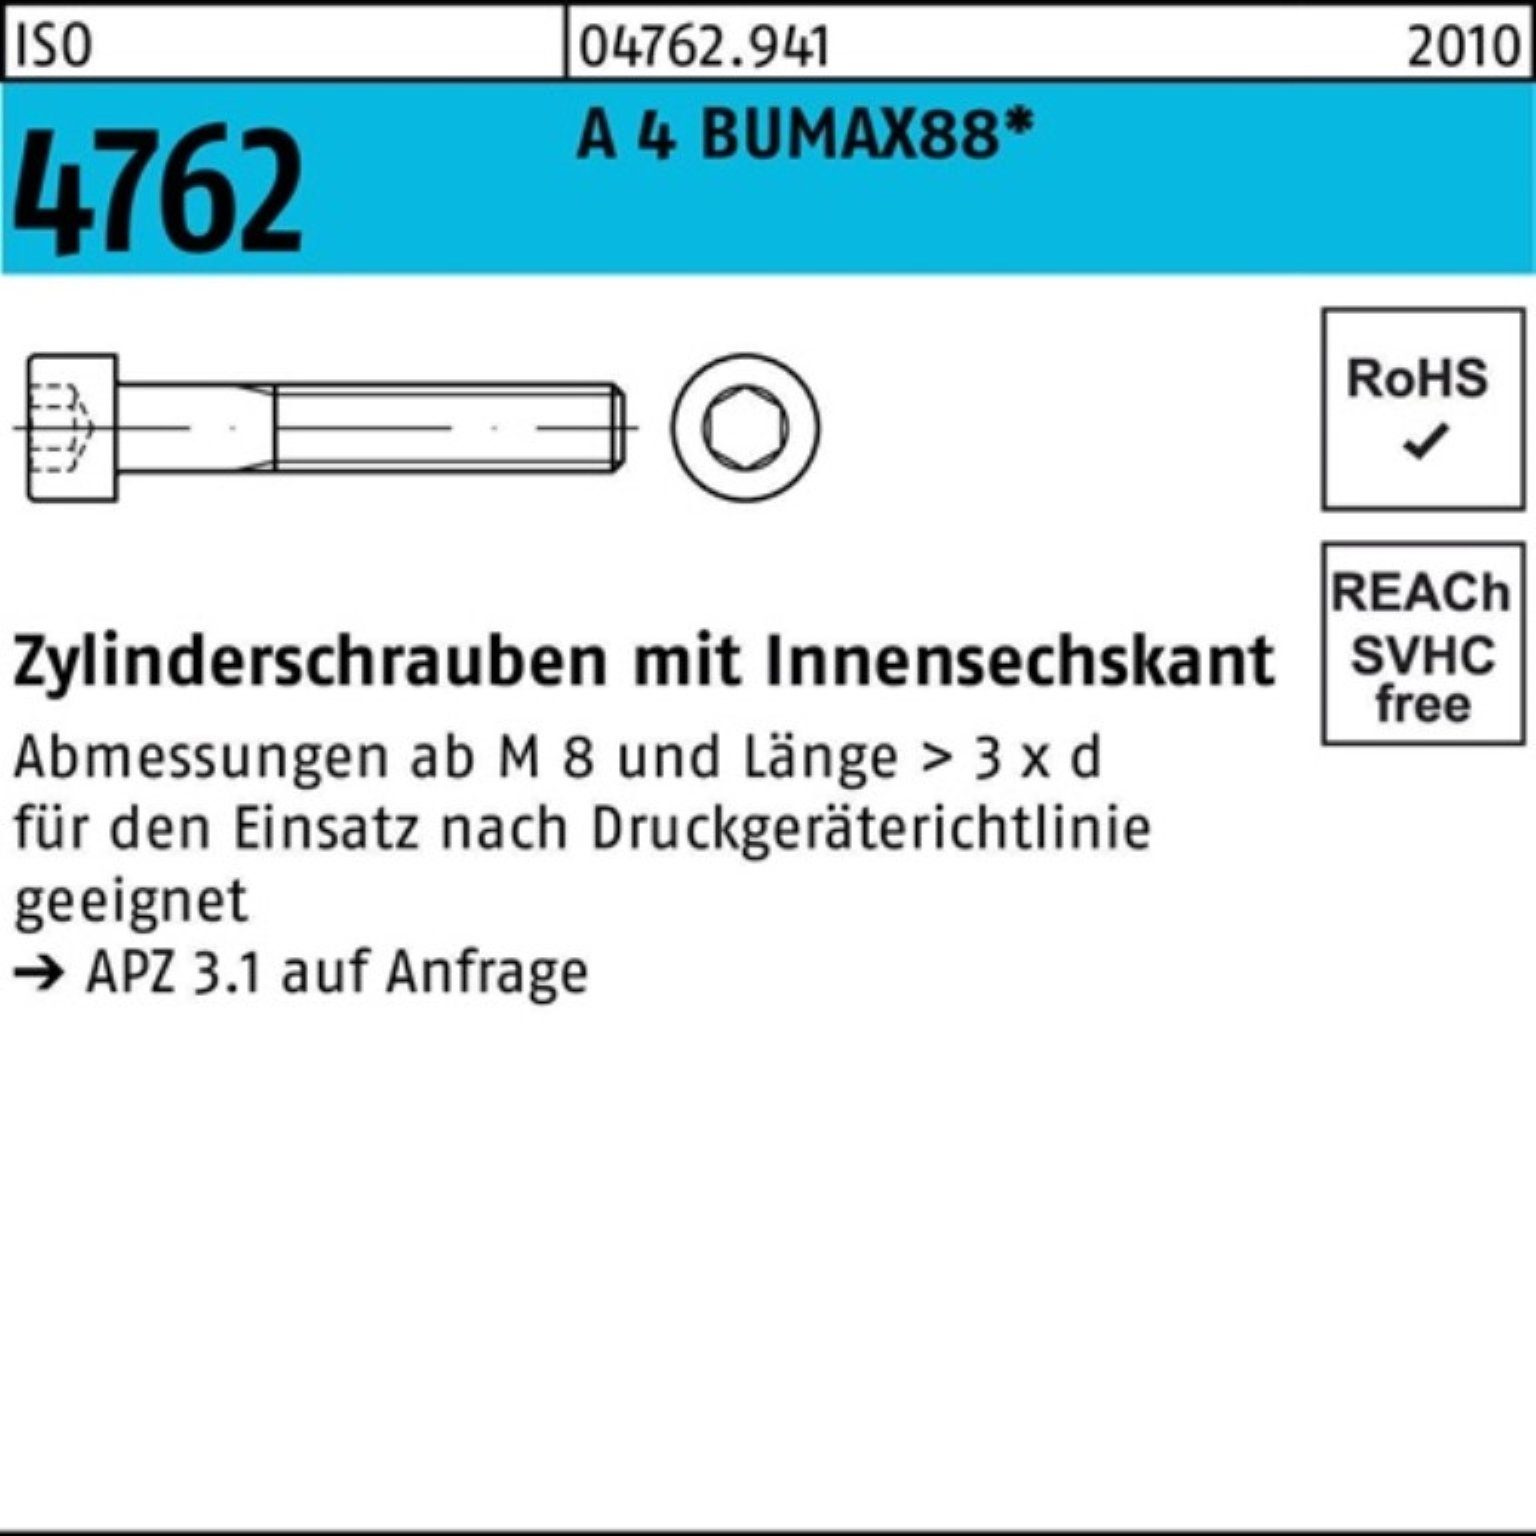 Bufab Zylinderschraube 200er Pack Zylinderschraube ISO 4762 Innen-6kt M4x 12 A 4 BUMAX88 200